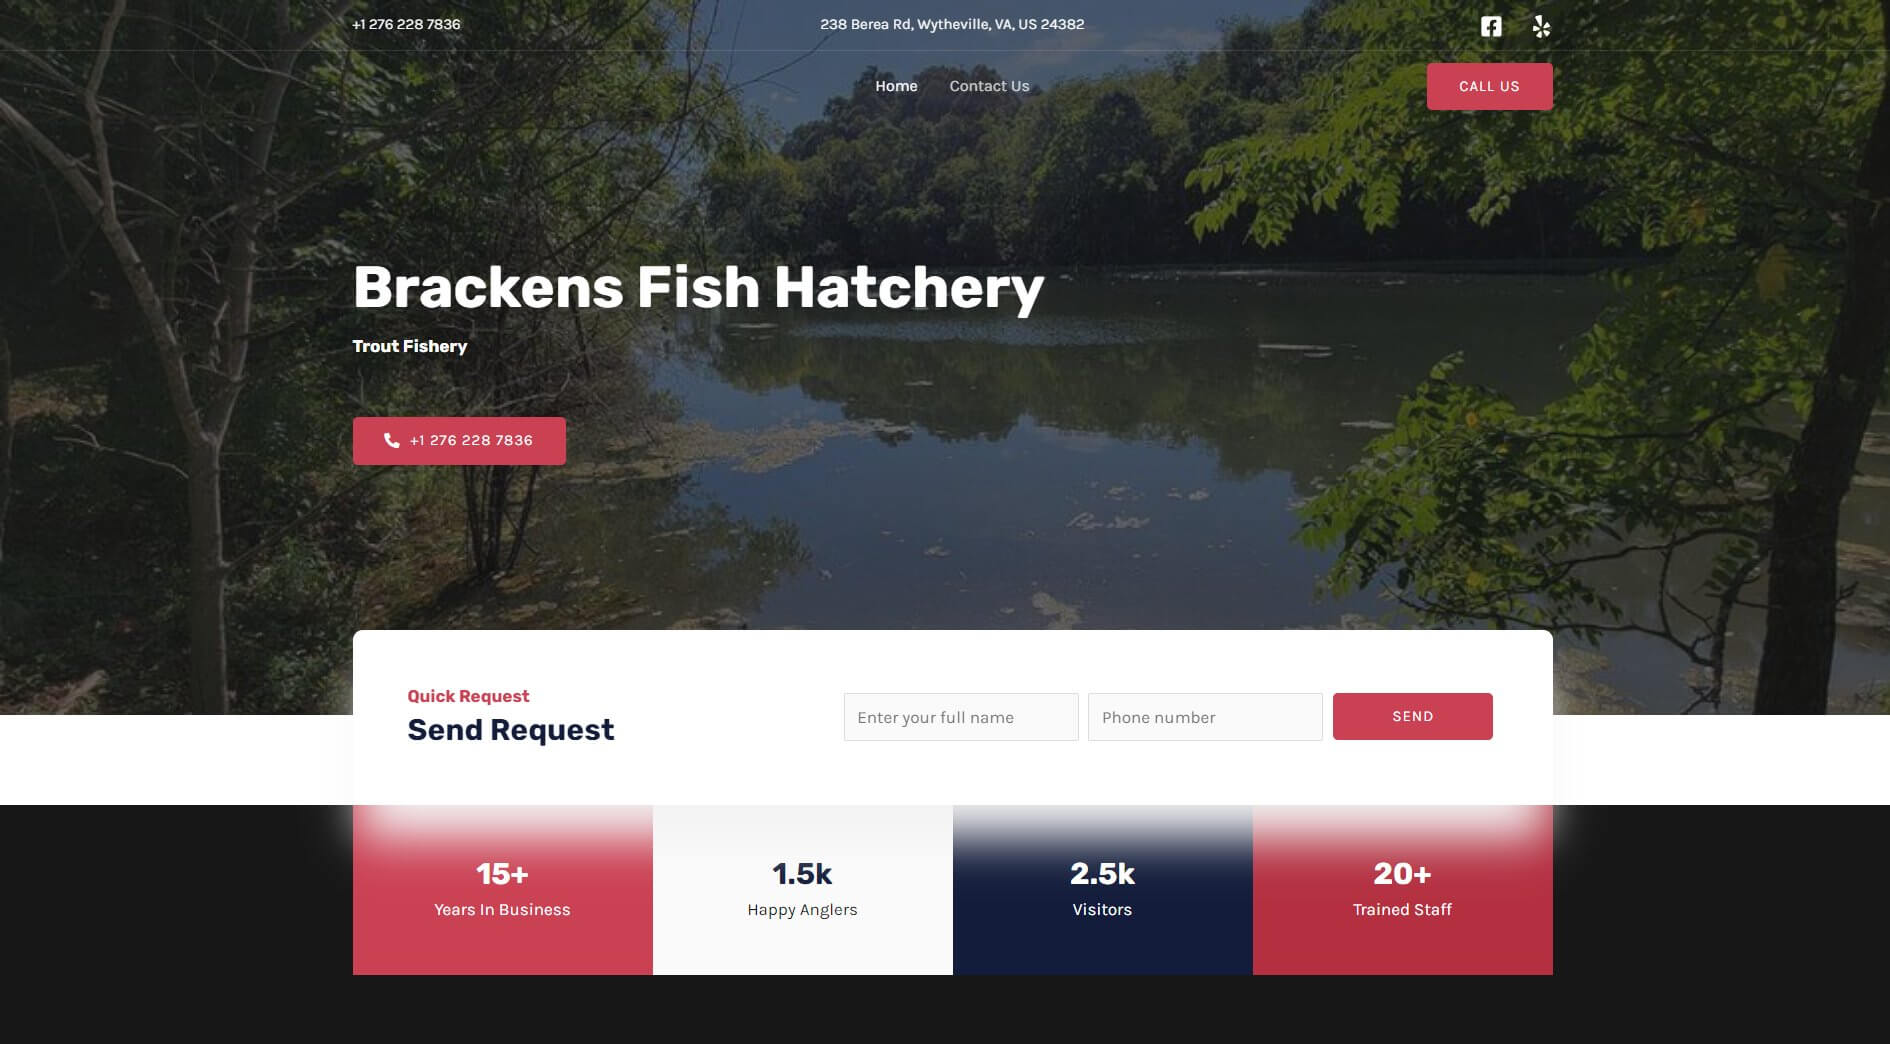 Brackens Fish Hatchery